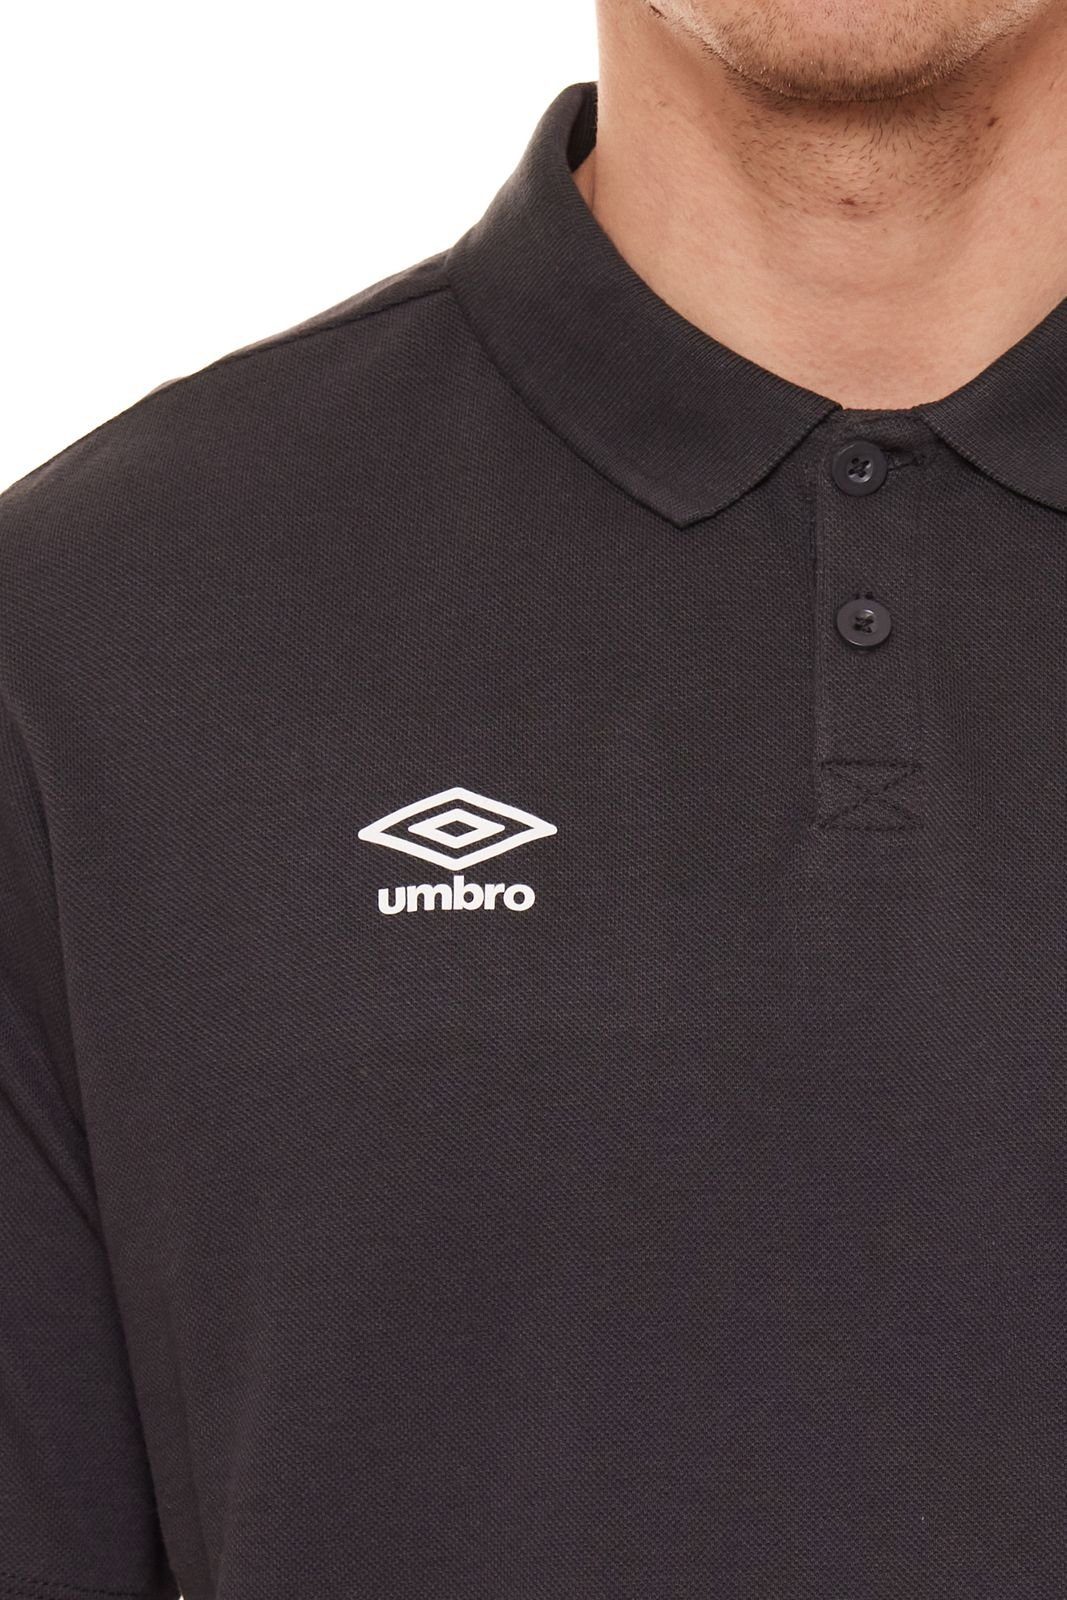 Umbro Rundhalsshirt umbro Dunkelgrau Polo-Shirt komfortables Essential Herren UMTM0323-825 Polohemd Golf-Shirt Club